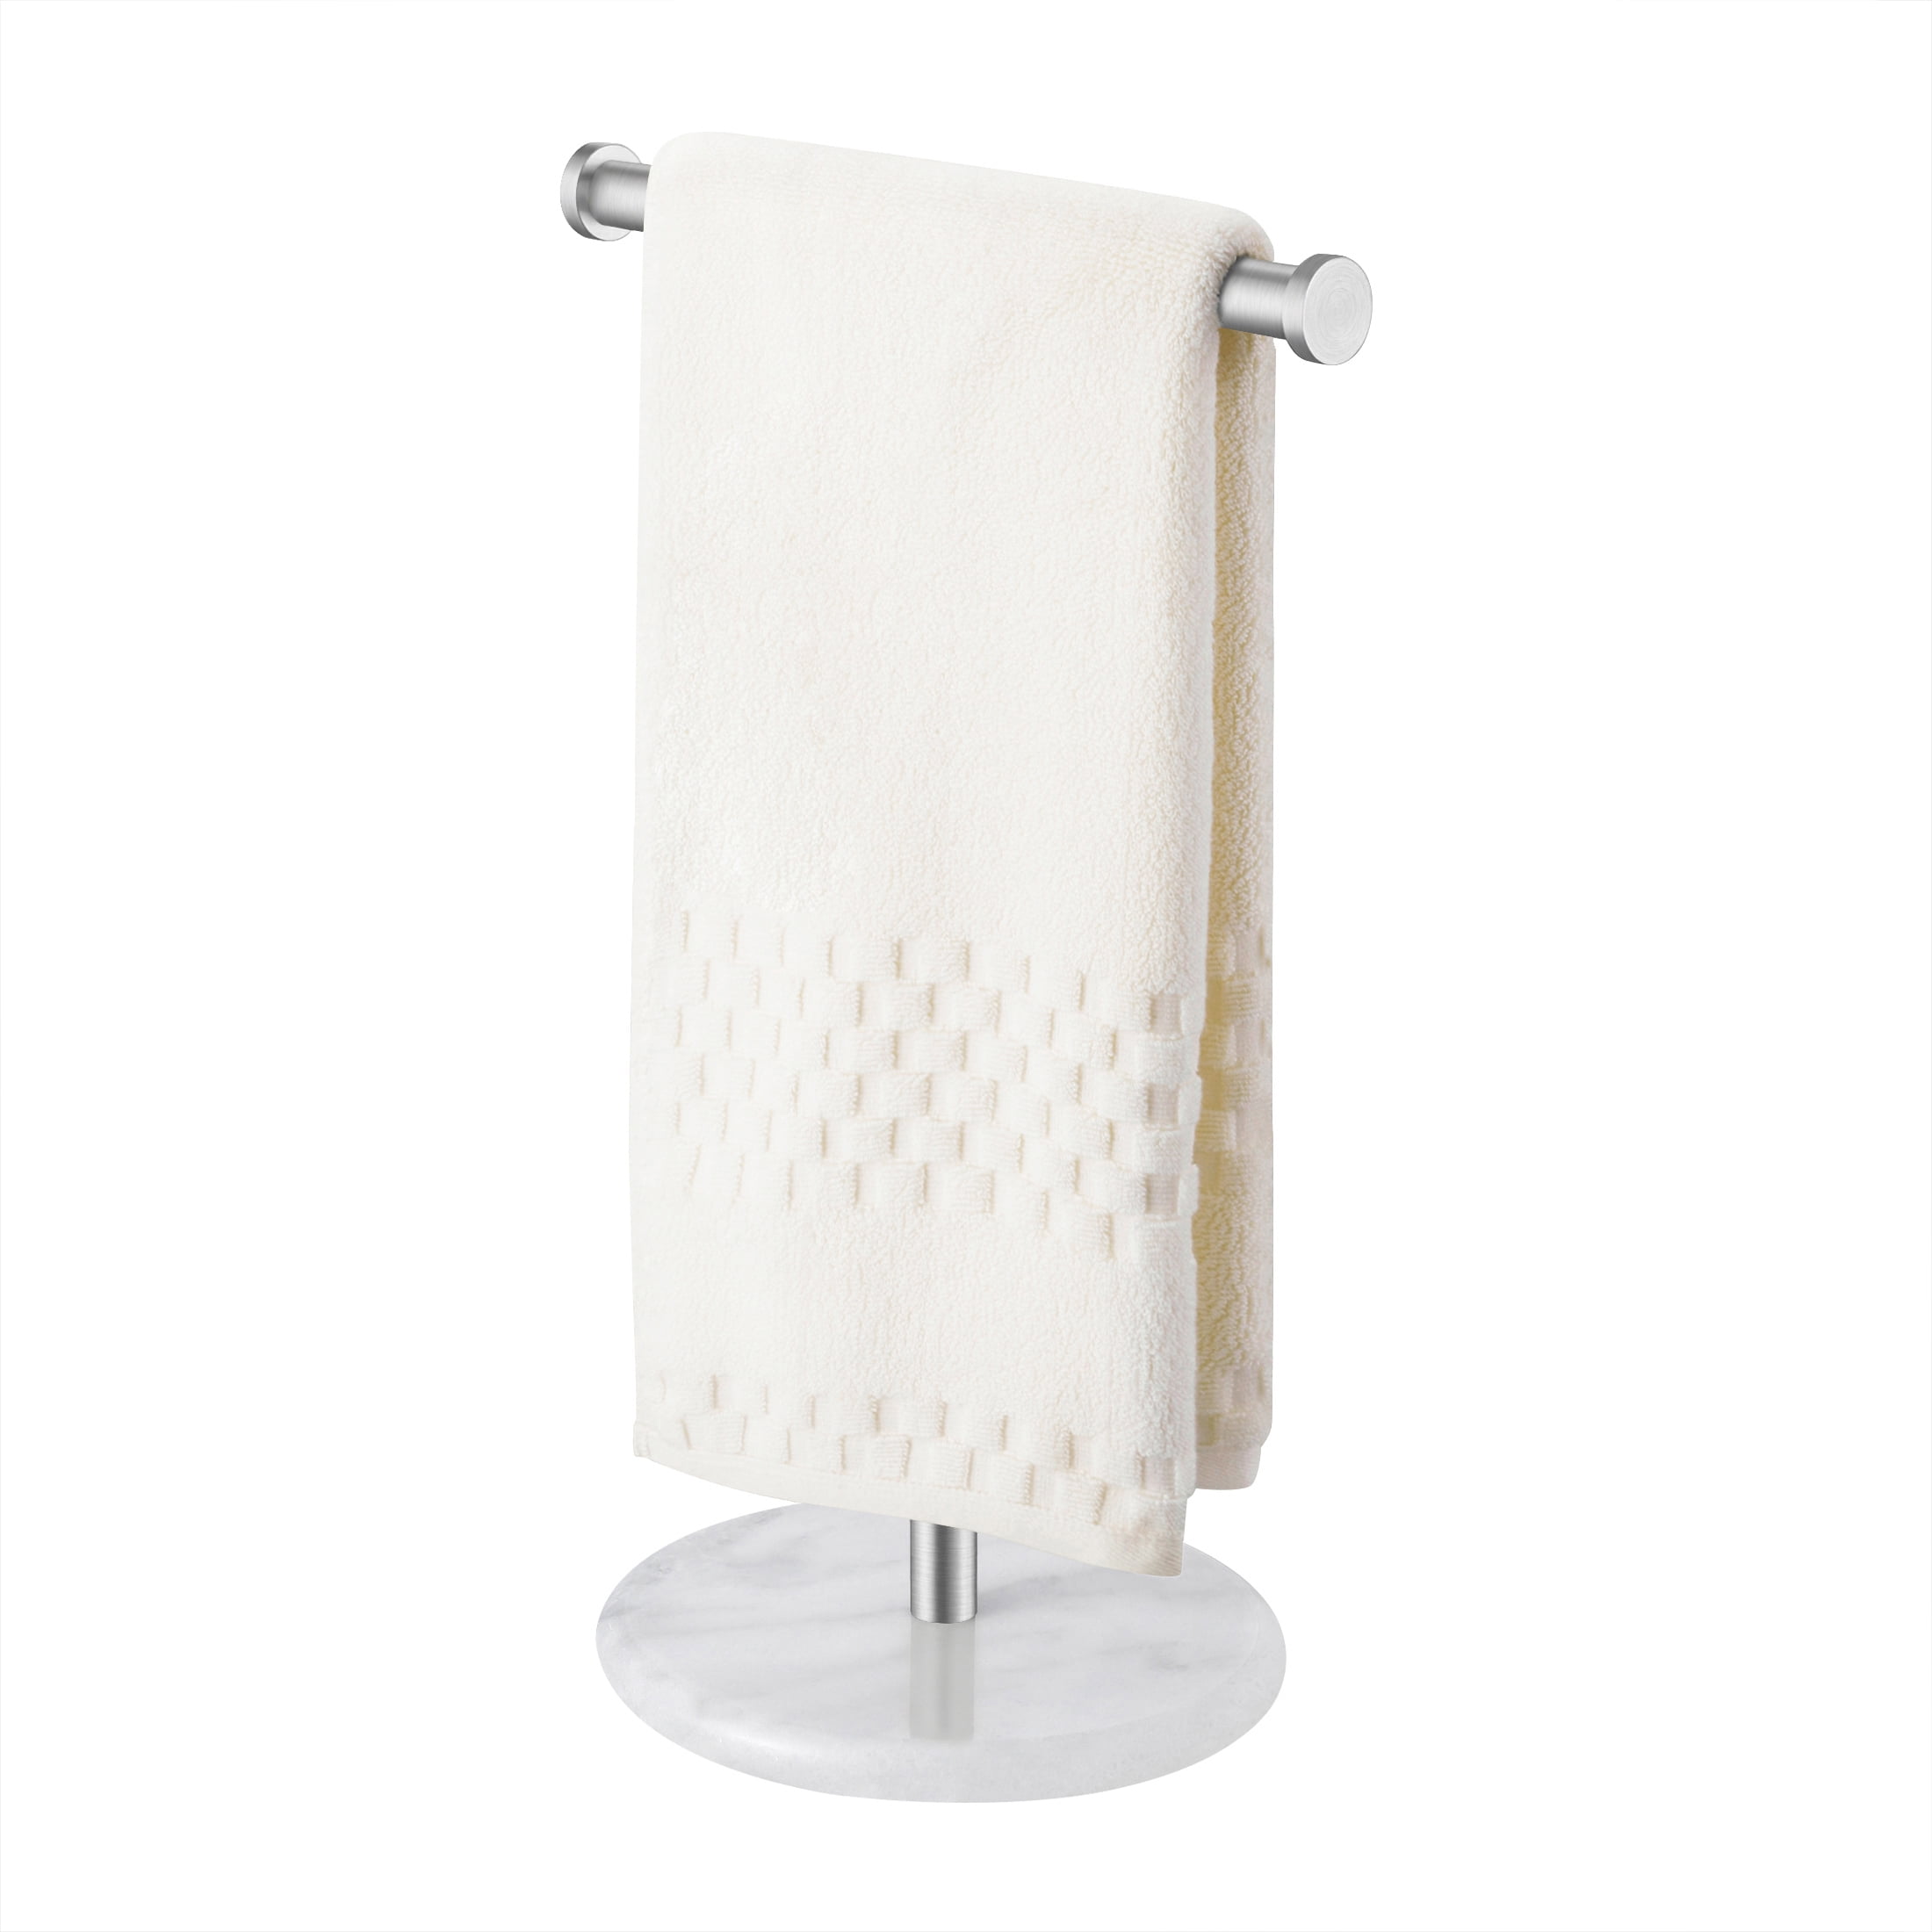 Kaitse Paper Towel Holder Stand